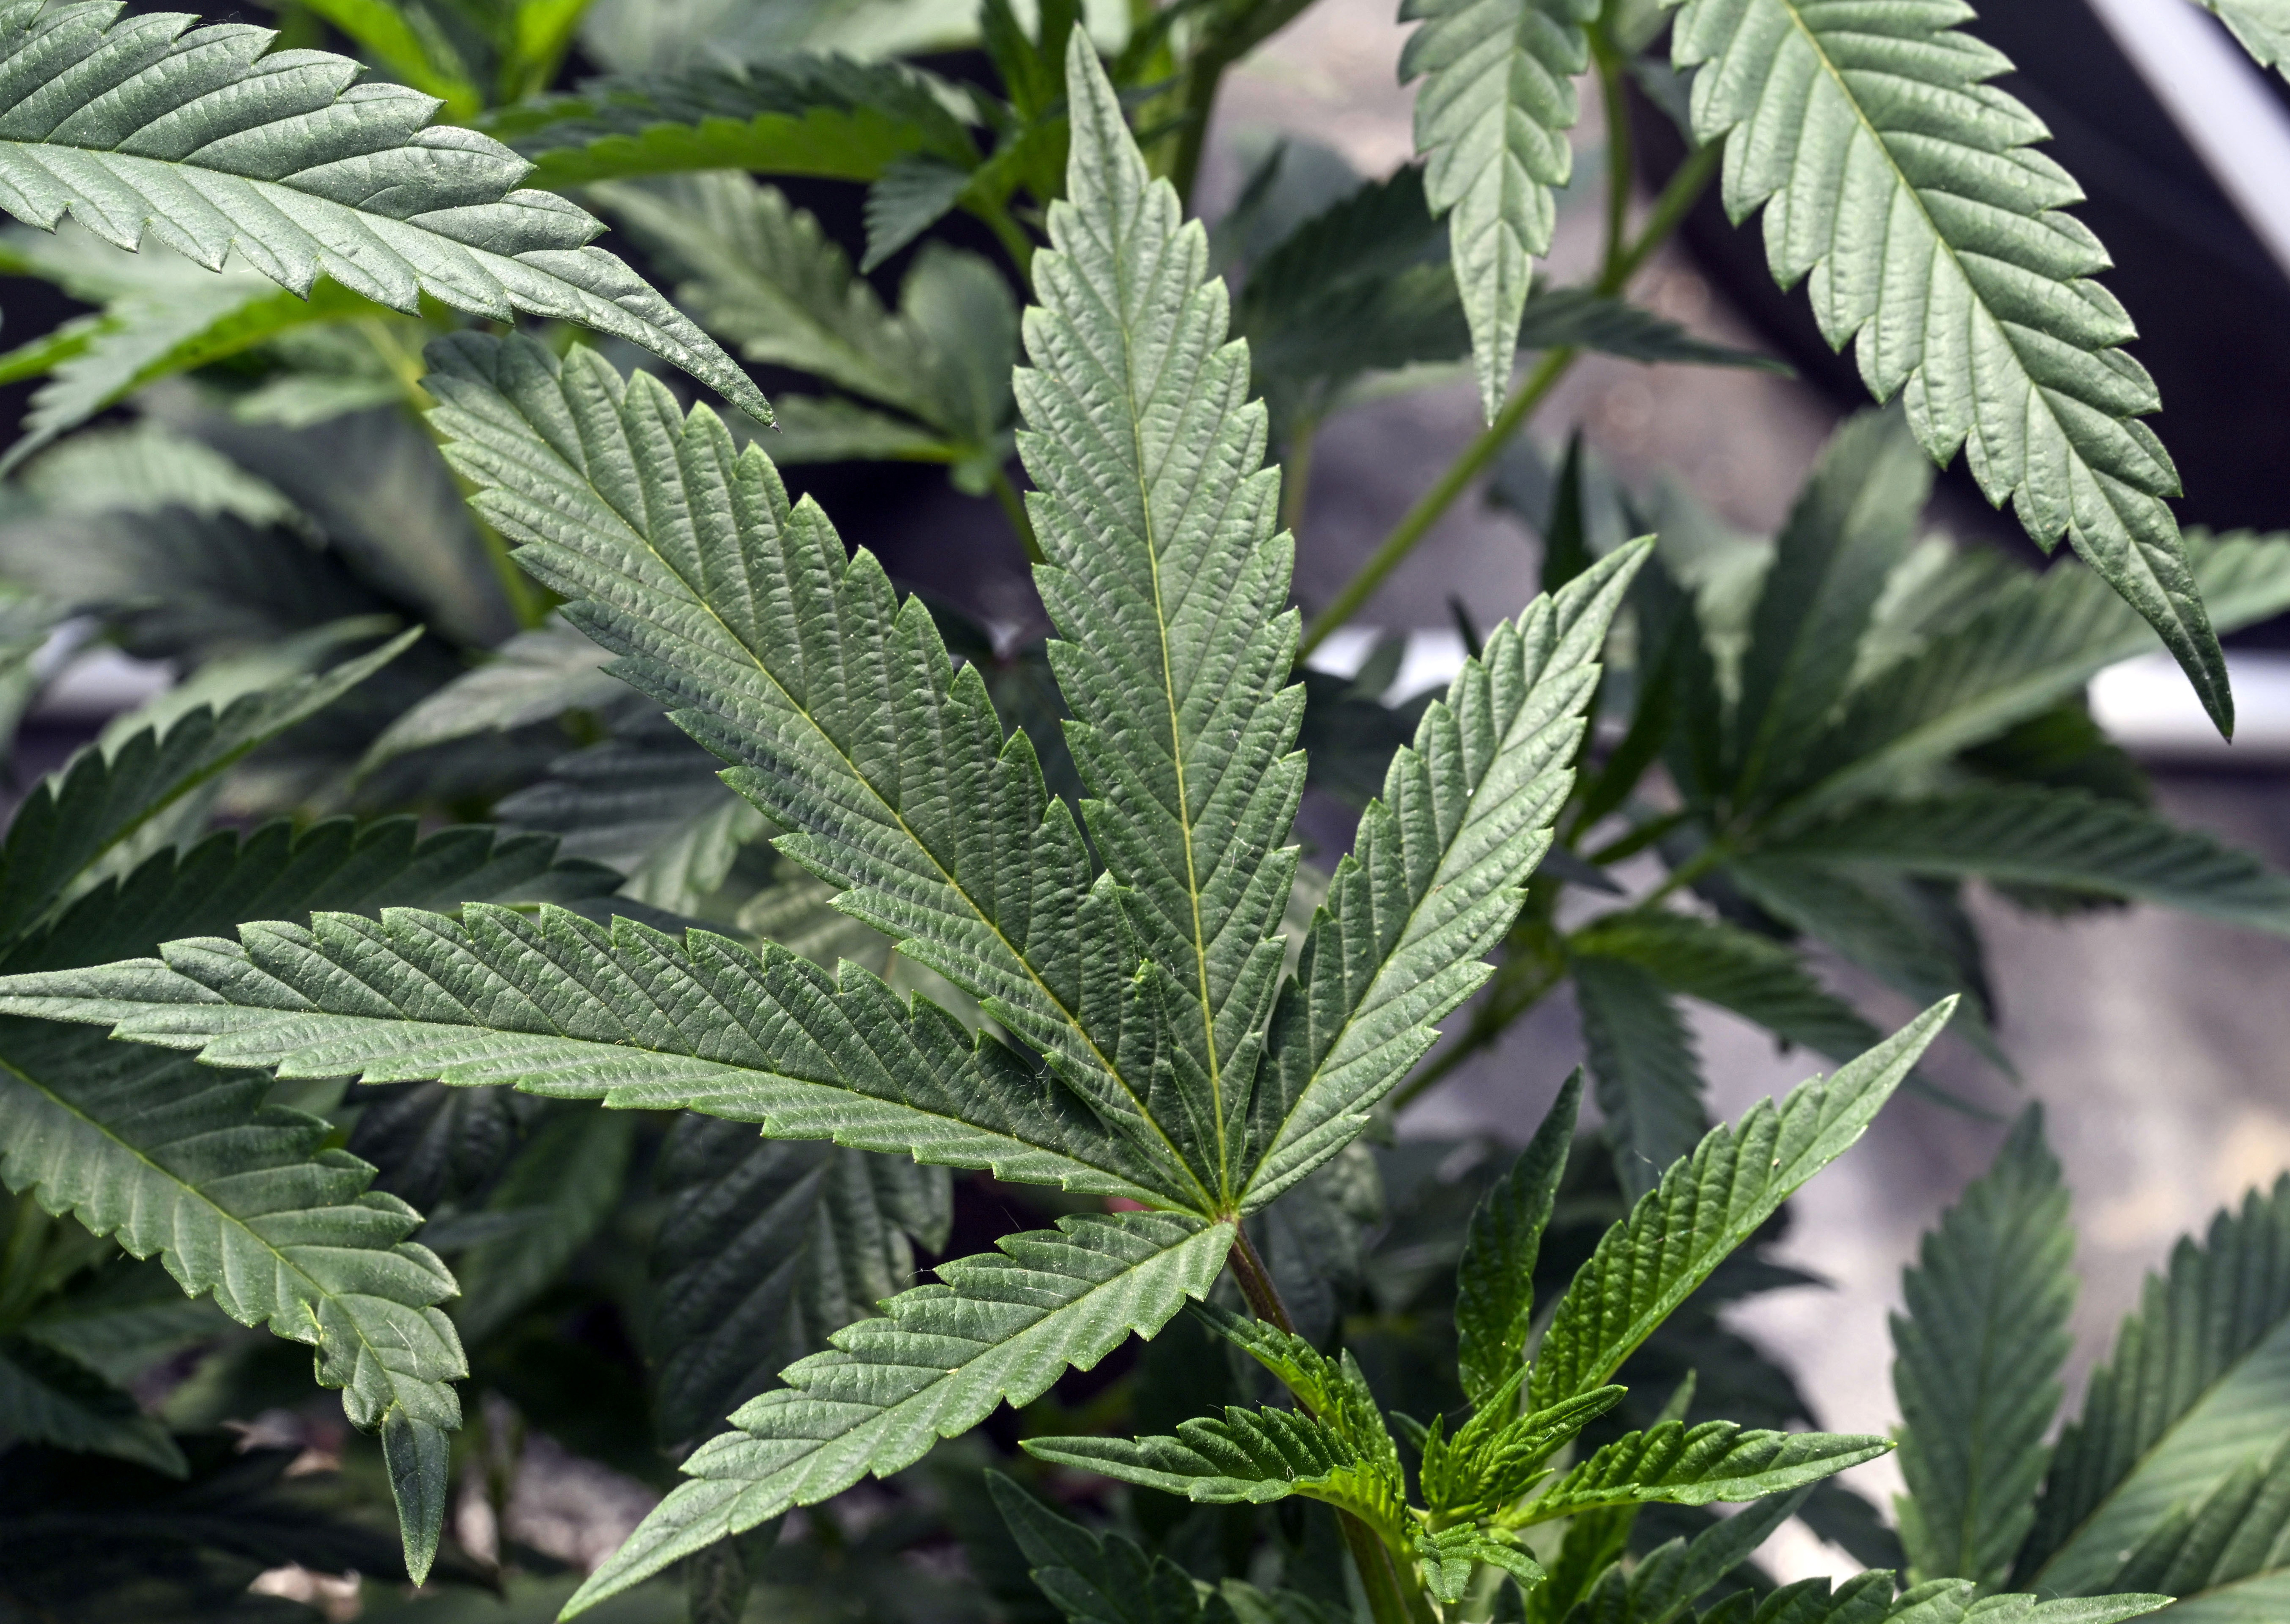 Review of NYS Marijuana Drug Testing Laws